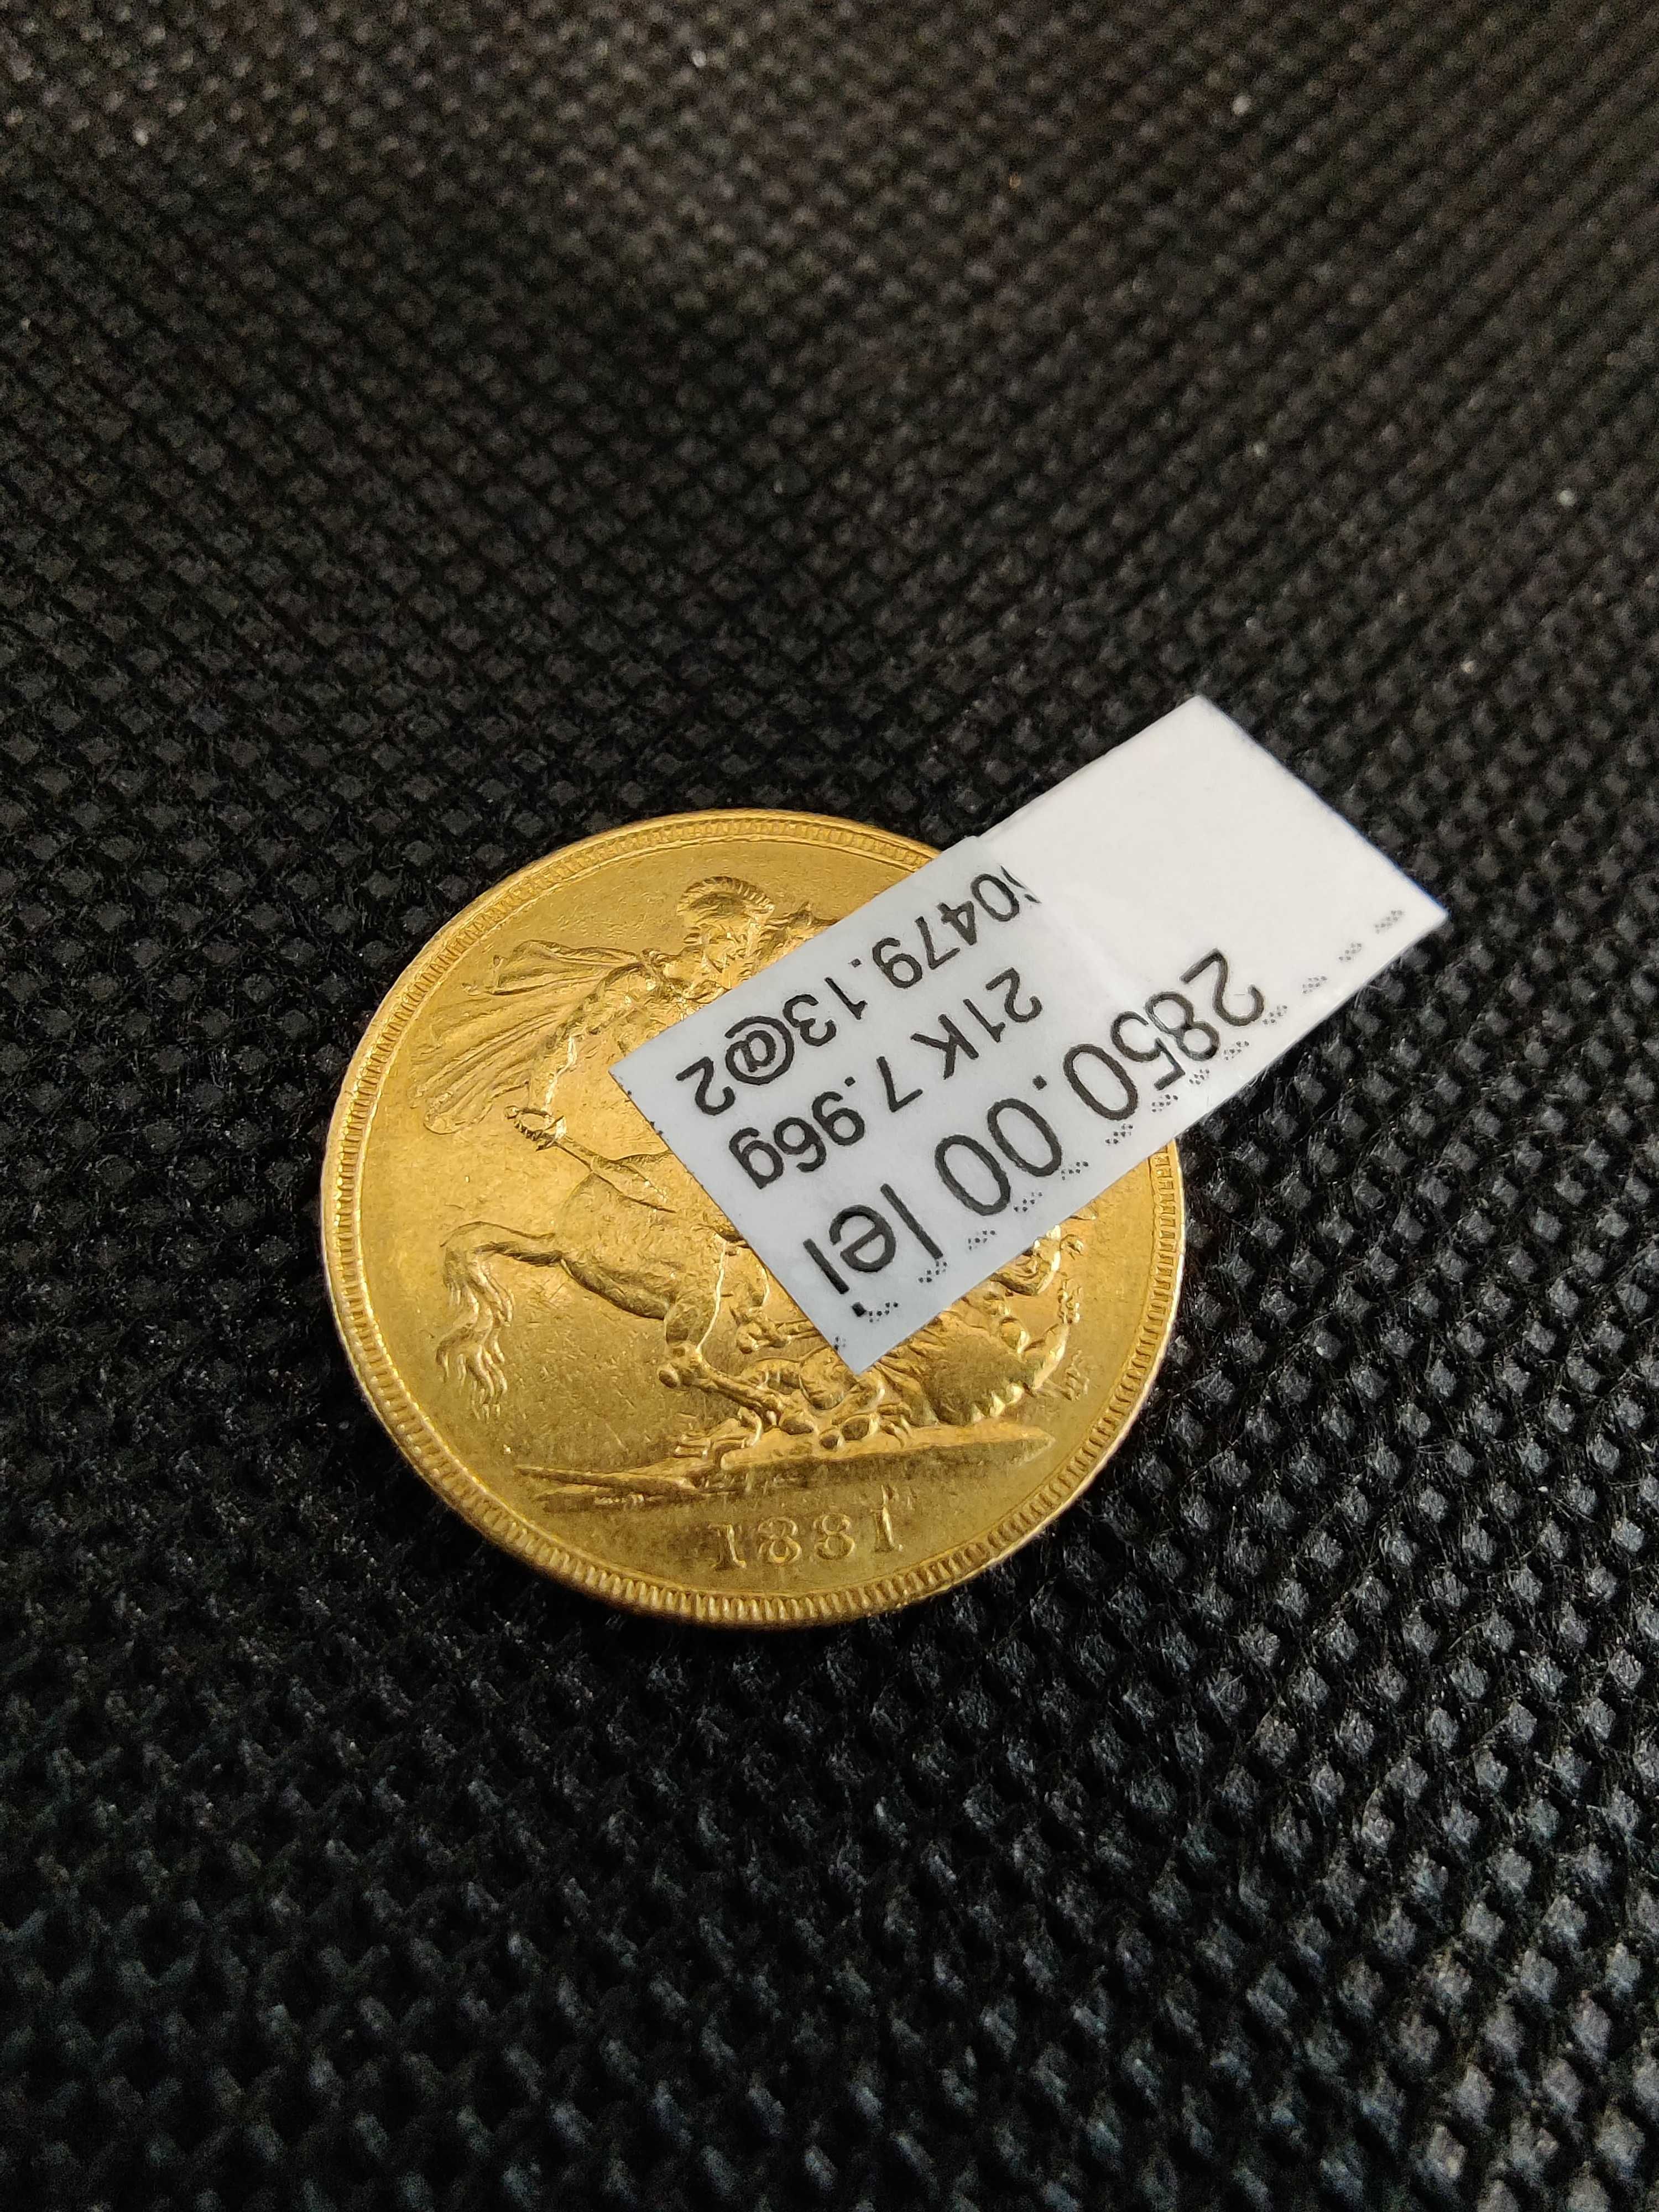 (Ag41) Moneda de schimb aur, 21K (2850 lei)